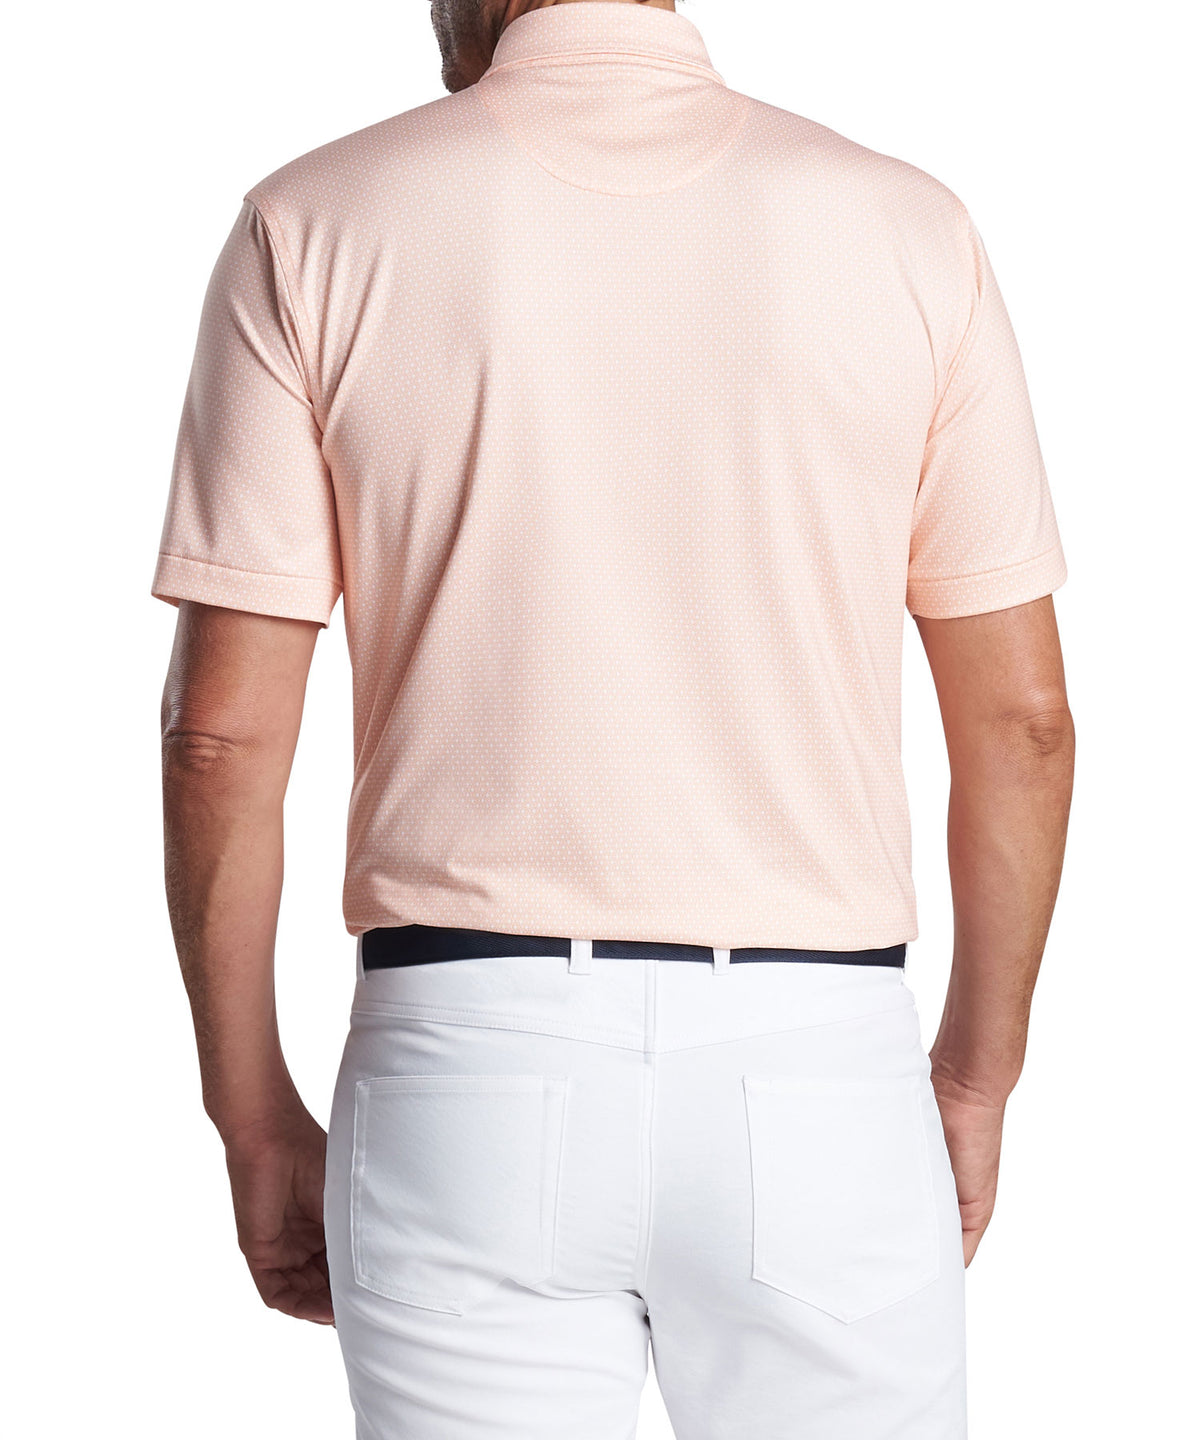 Peter Millar Short Sleeve Tesseract Print Polo Knit Shirt, Big & Tall